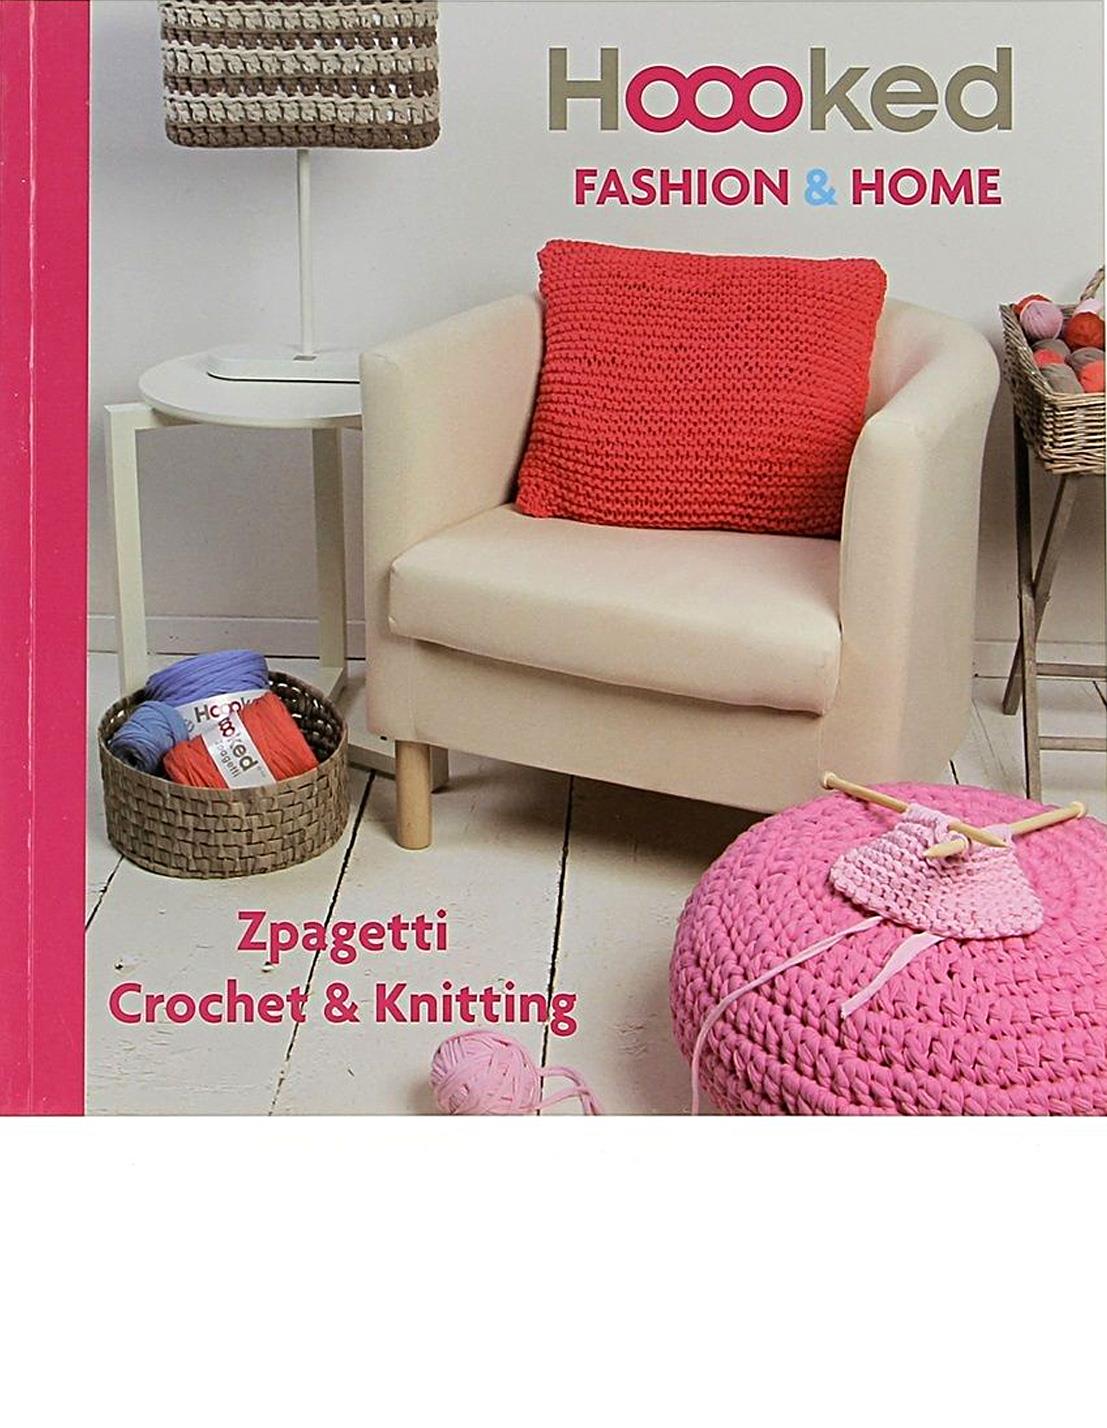 Modern Crochet Bible - Pattern Book by Sarah Shrimpton